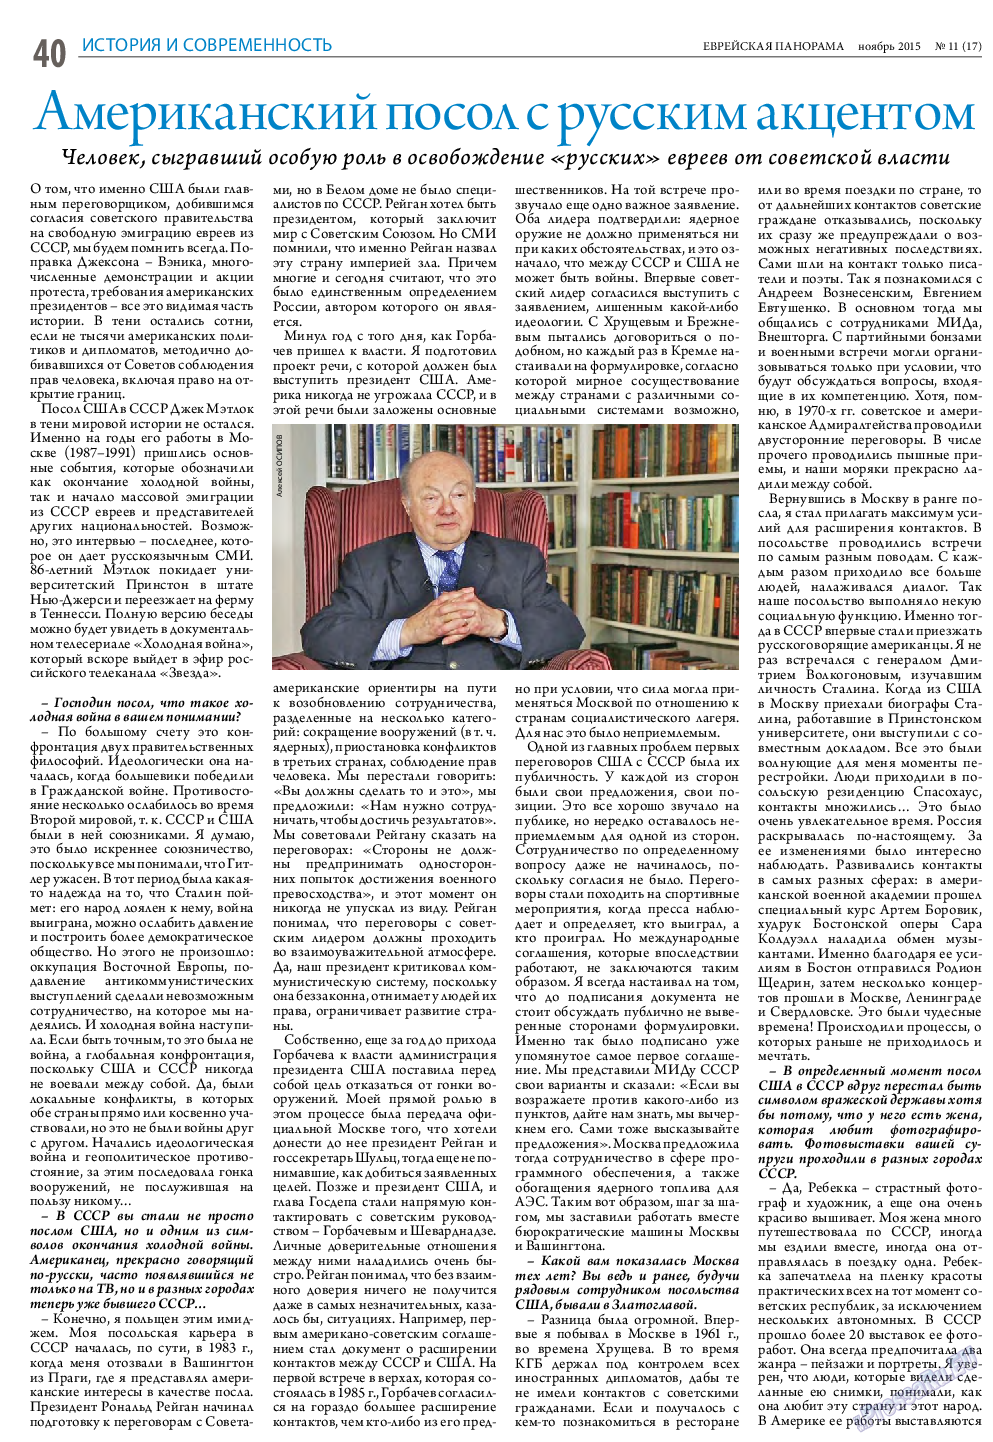 Еврейская панорама, газета. 2015 №11 стр.40